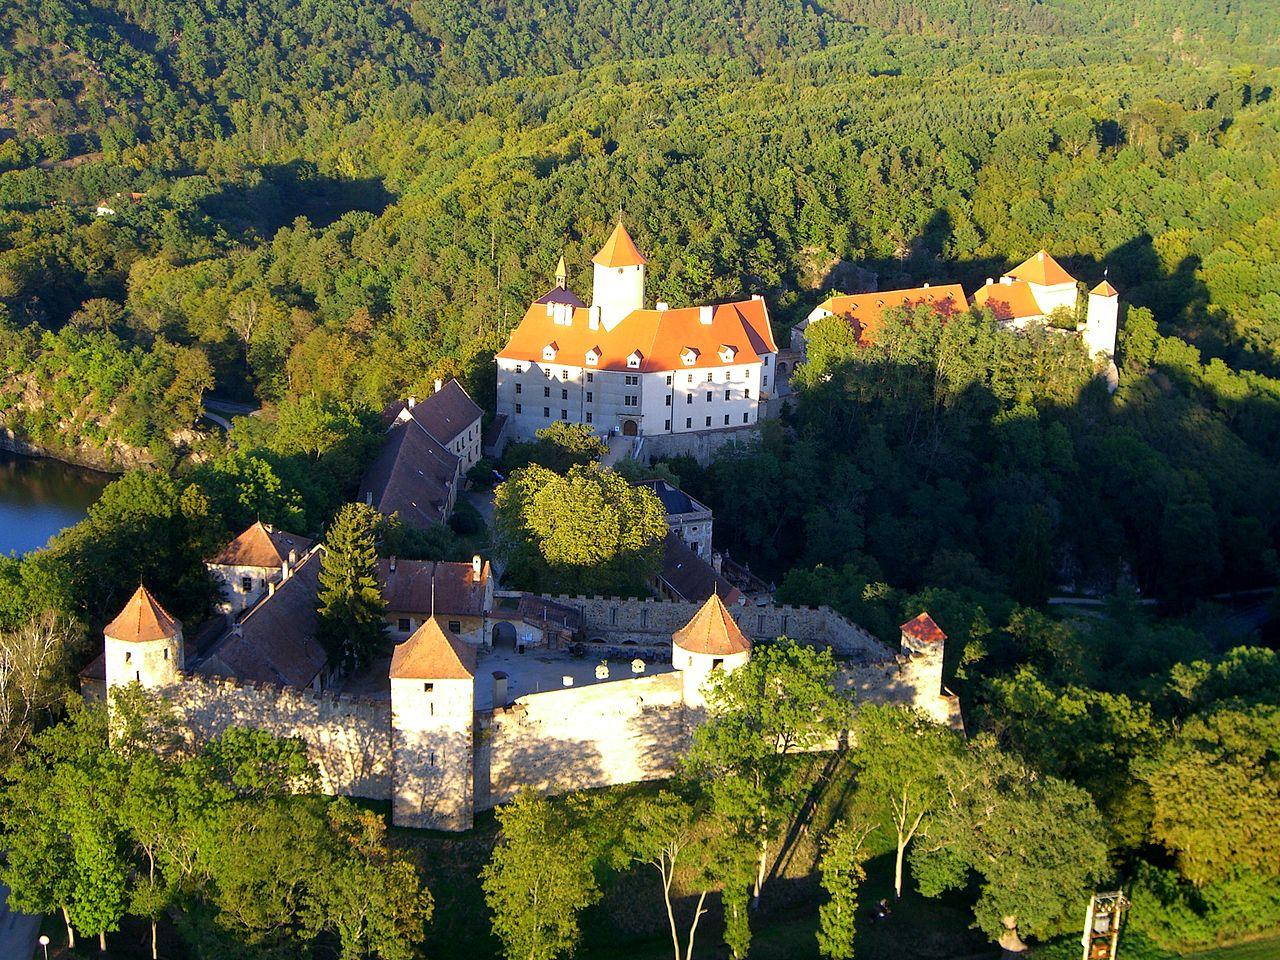 Cover image of this place Veveří Castle